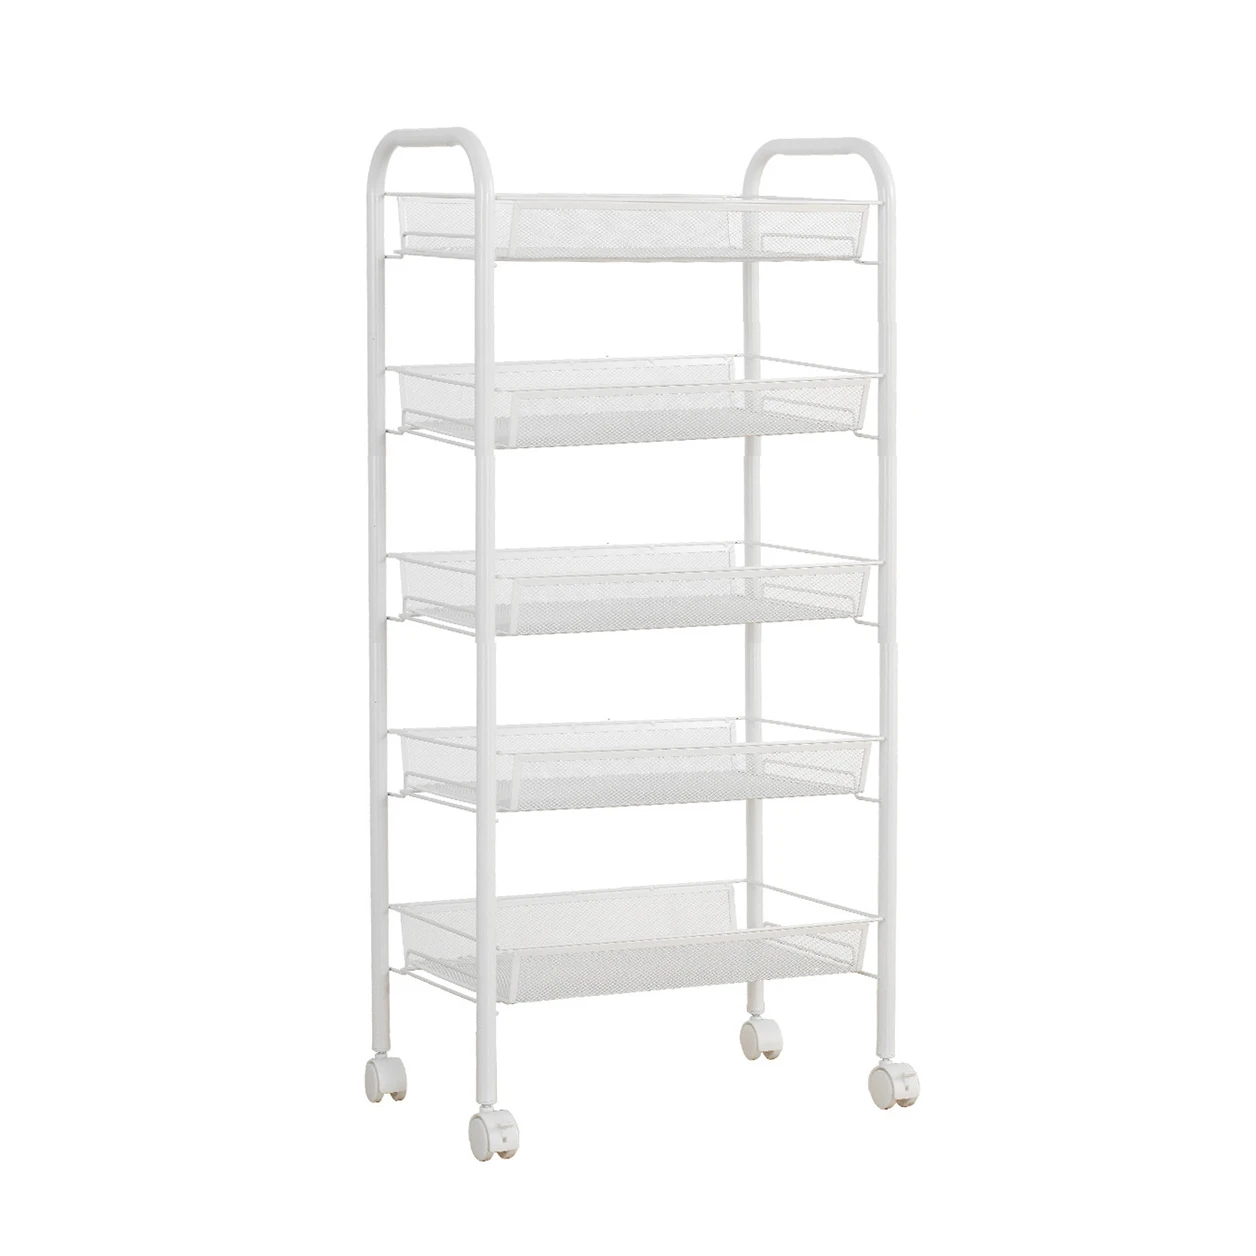 Image FLST White Metal Mesh Rolling Cart Storage Rack Shelves with Wheels for Kitchen Pantry Office Bedroom Bathroom Washroom Laundry